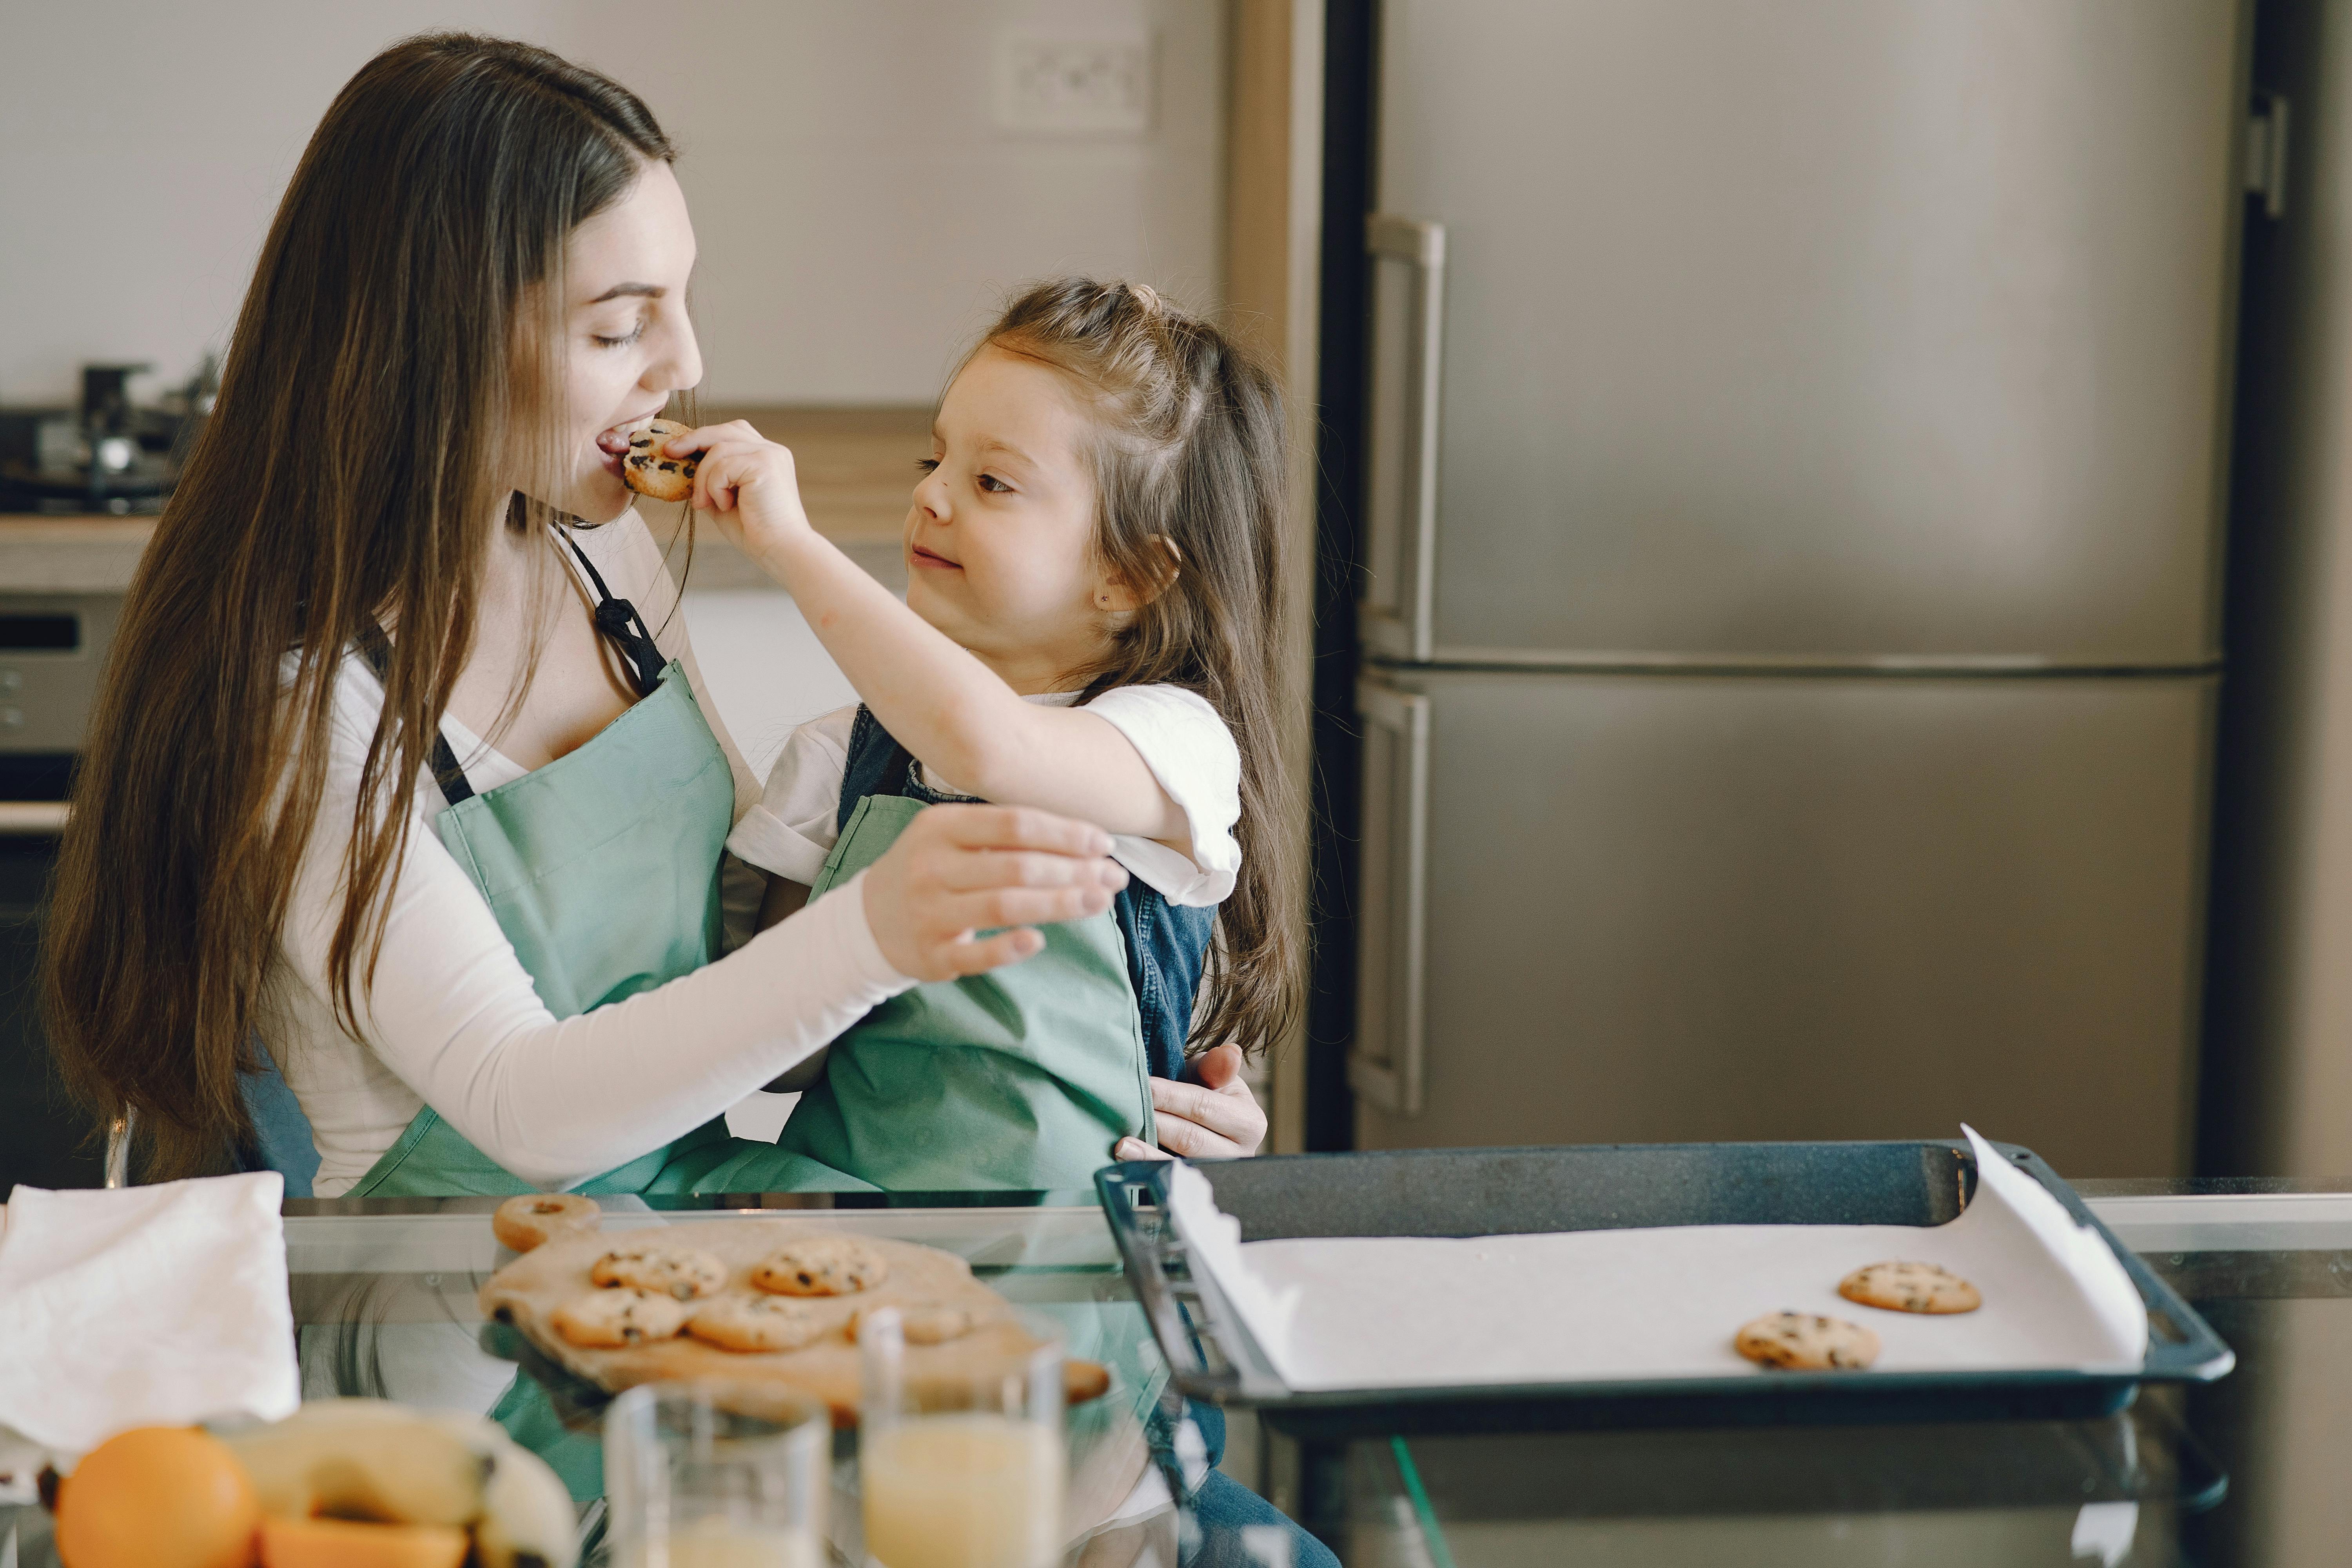 Mother and daughter bonding over cookies | Source: Pexels